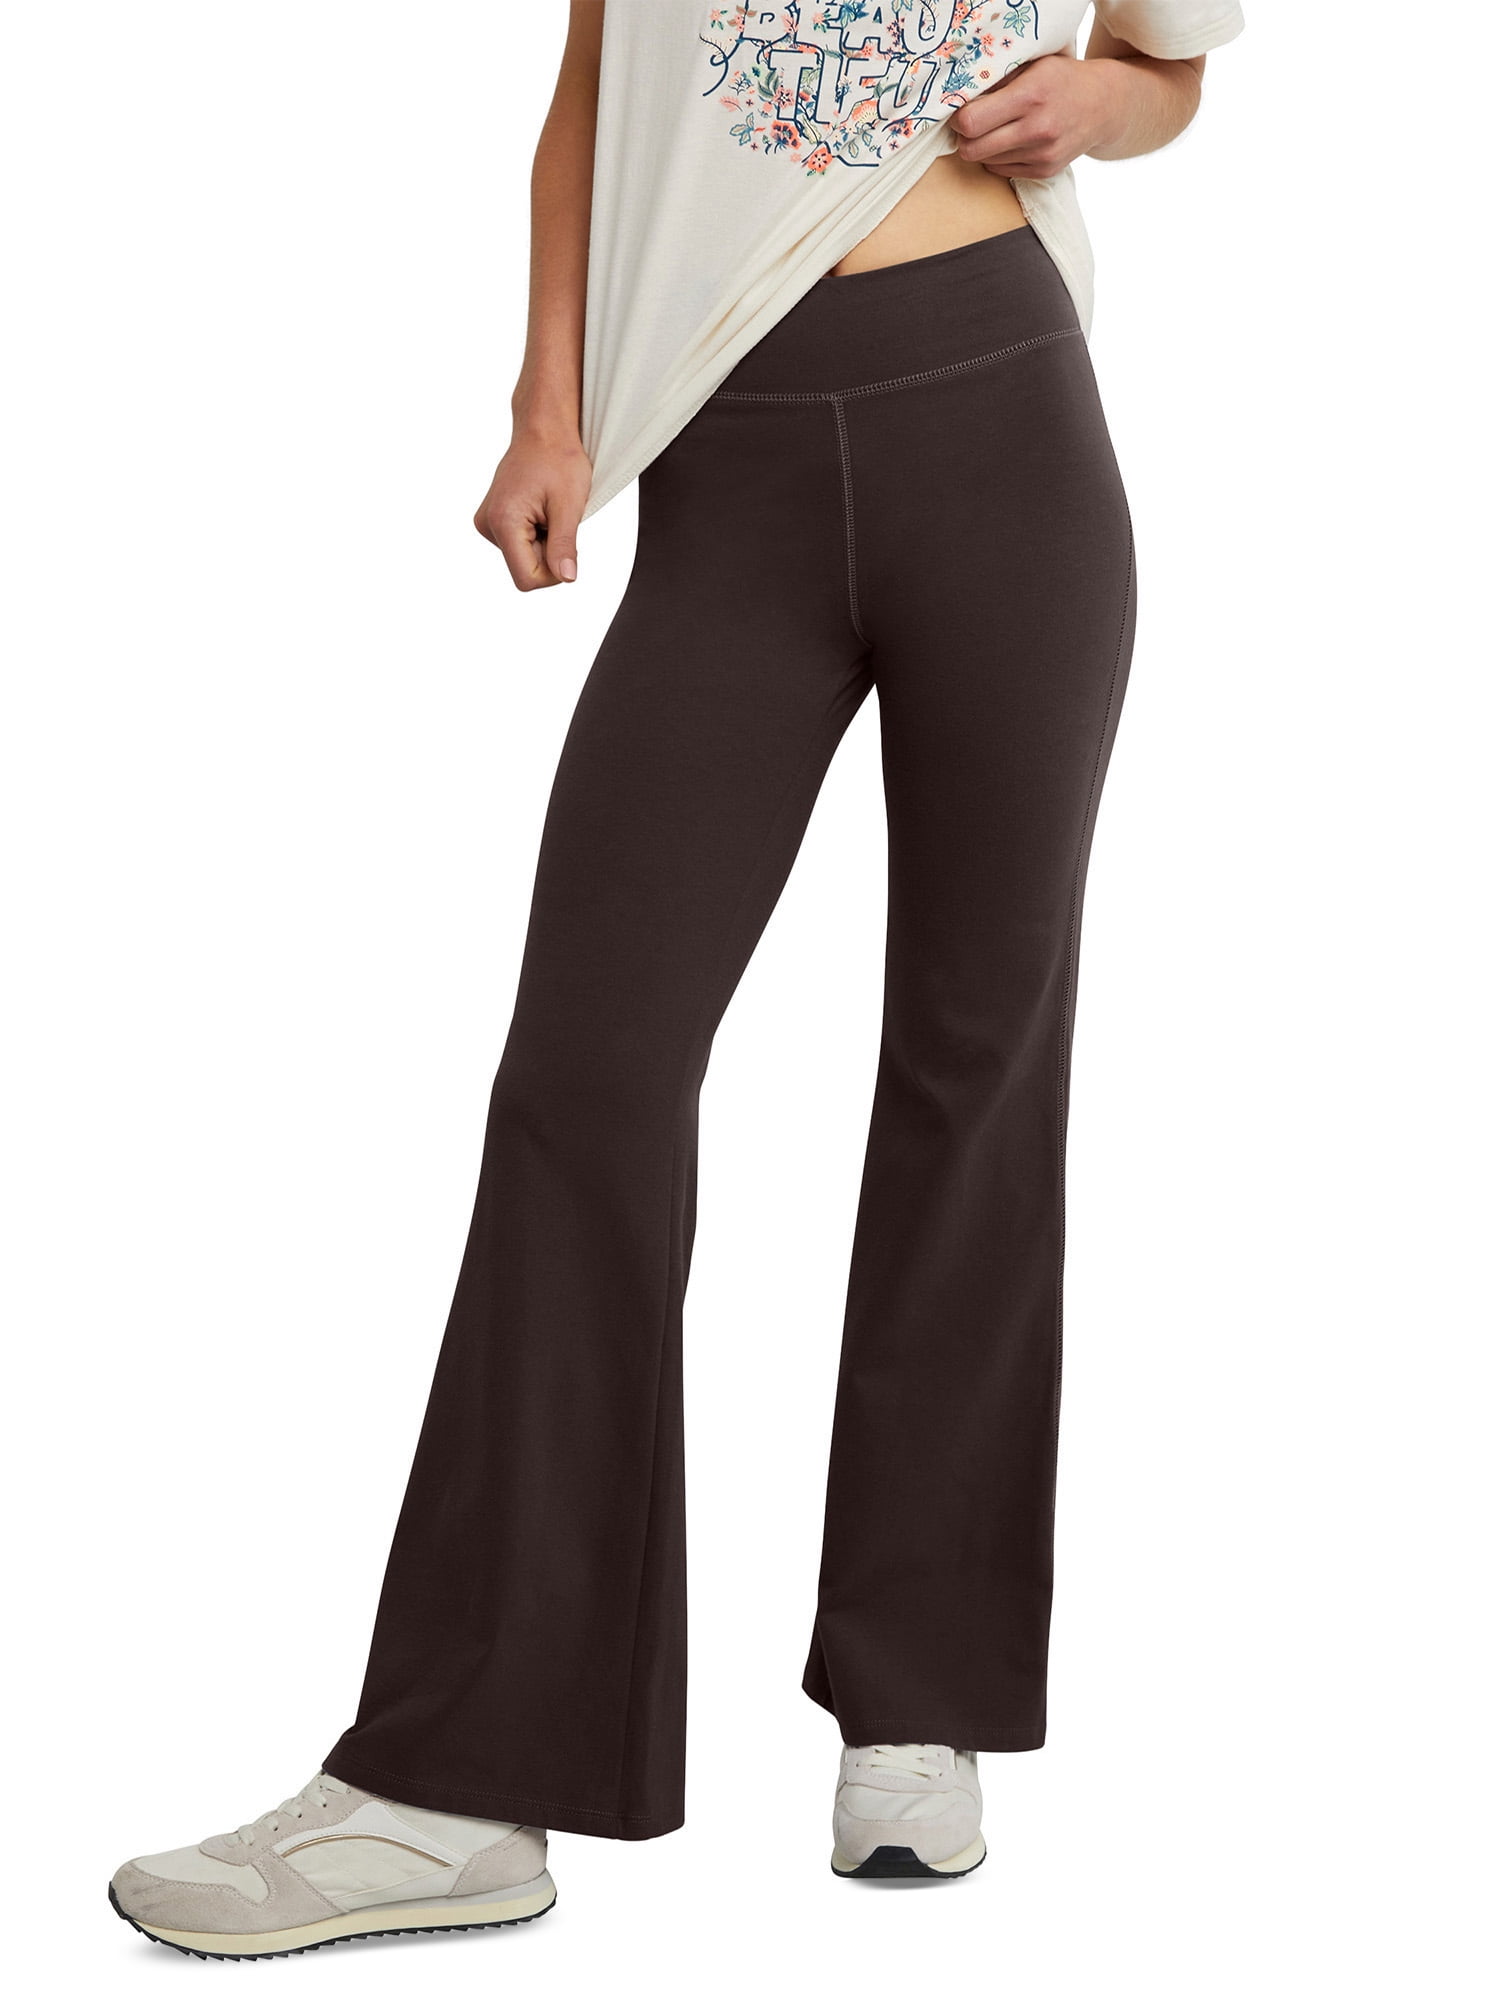 Hanes Originals Women's Stretch Jersey Flare Pants, 31 